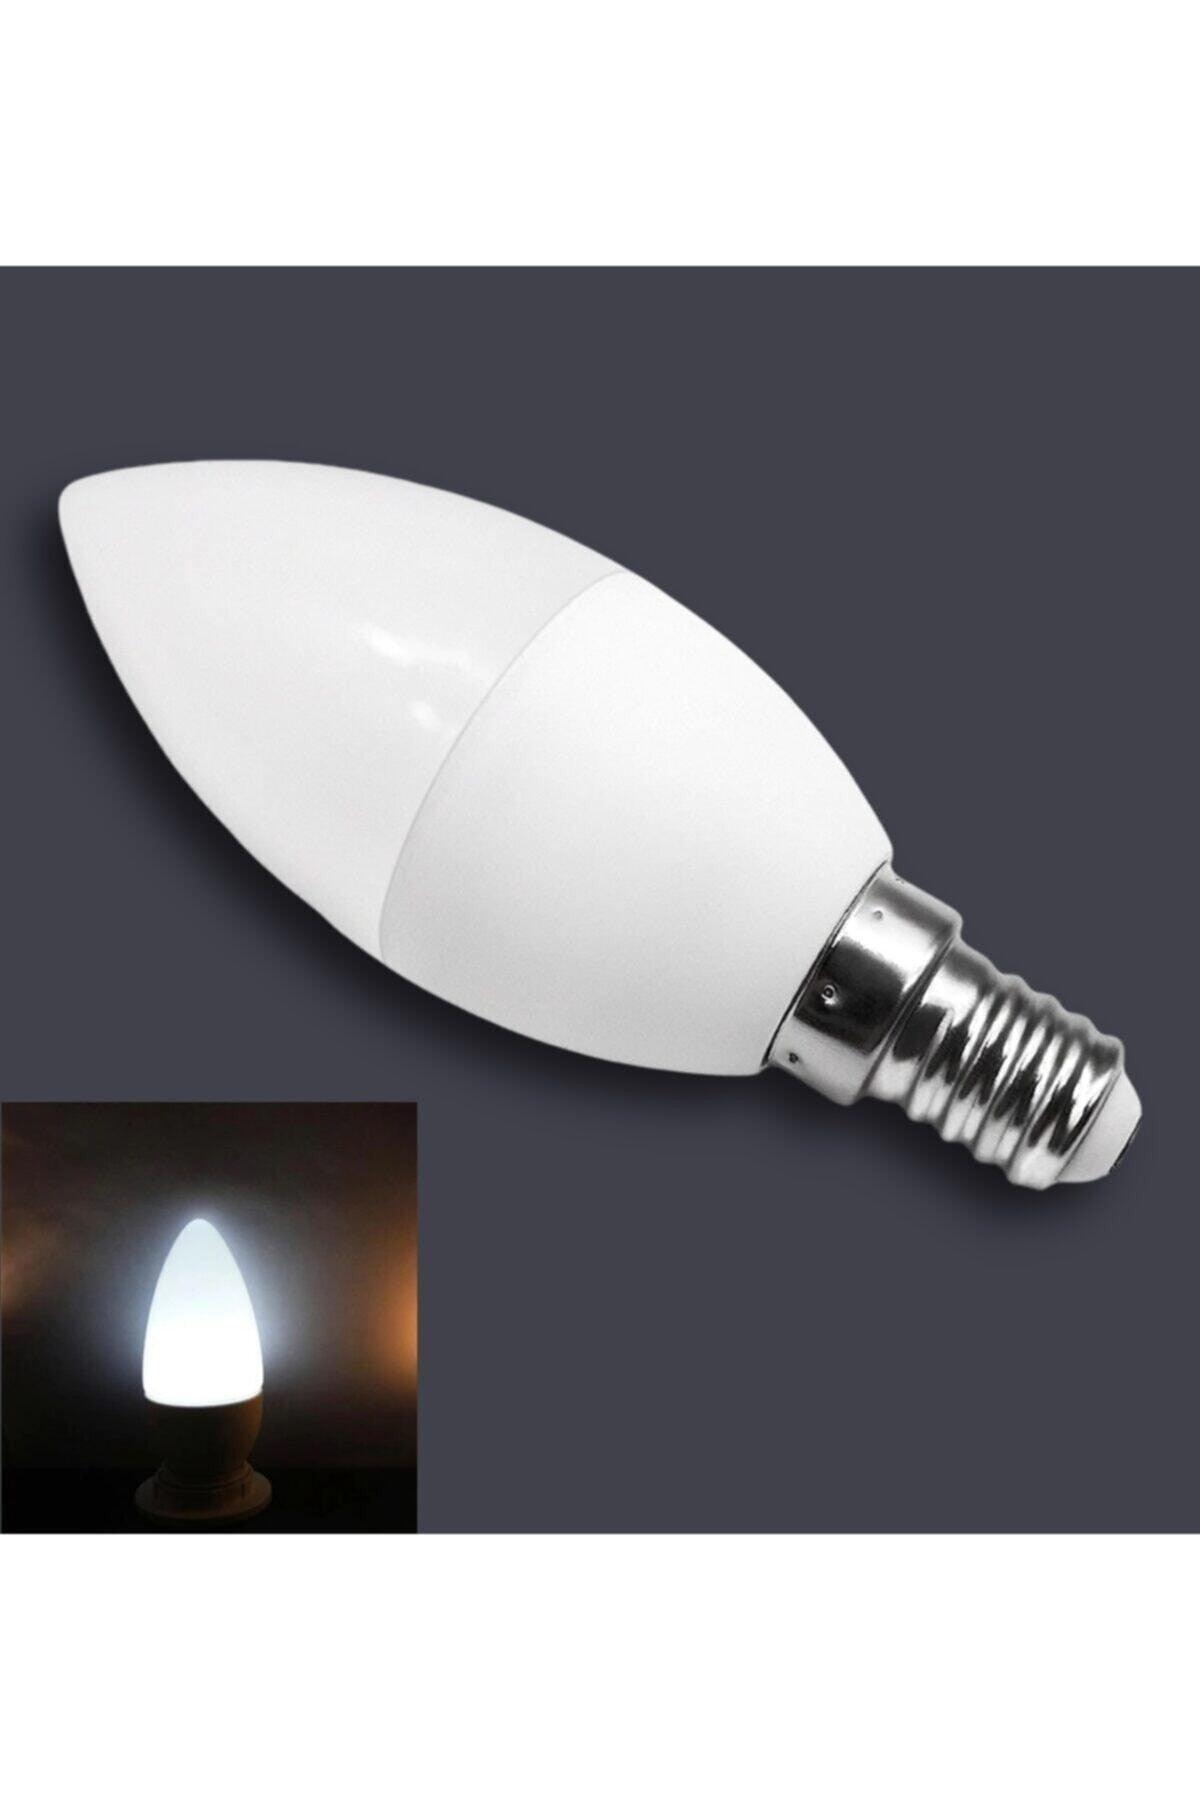 10 Pcs 7 Watt E14 Thin Lampholder White Light Candle